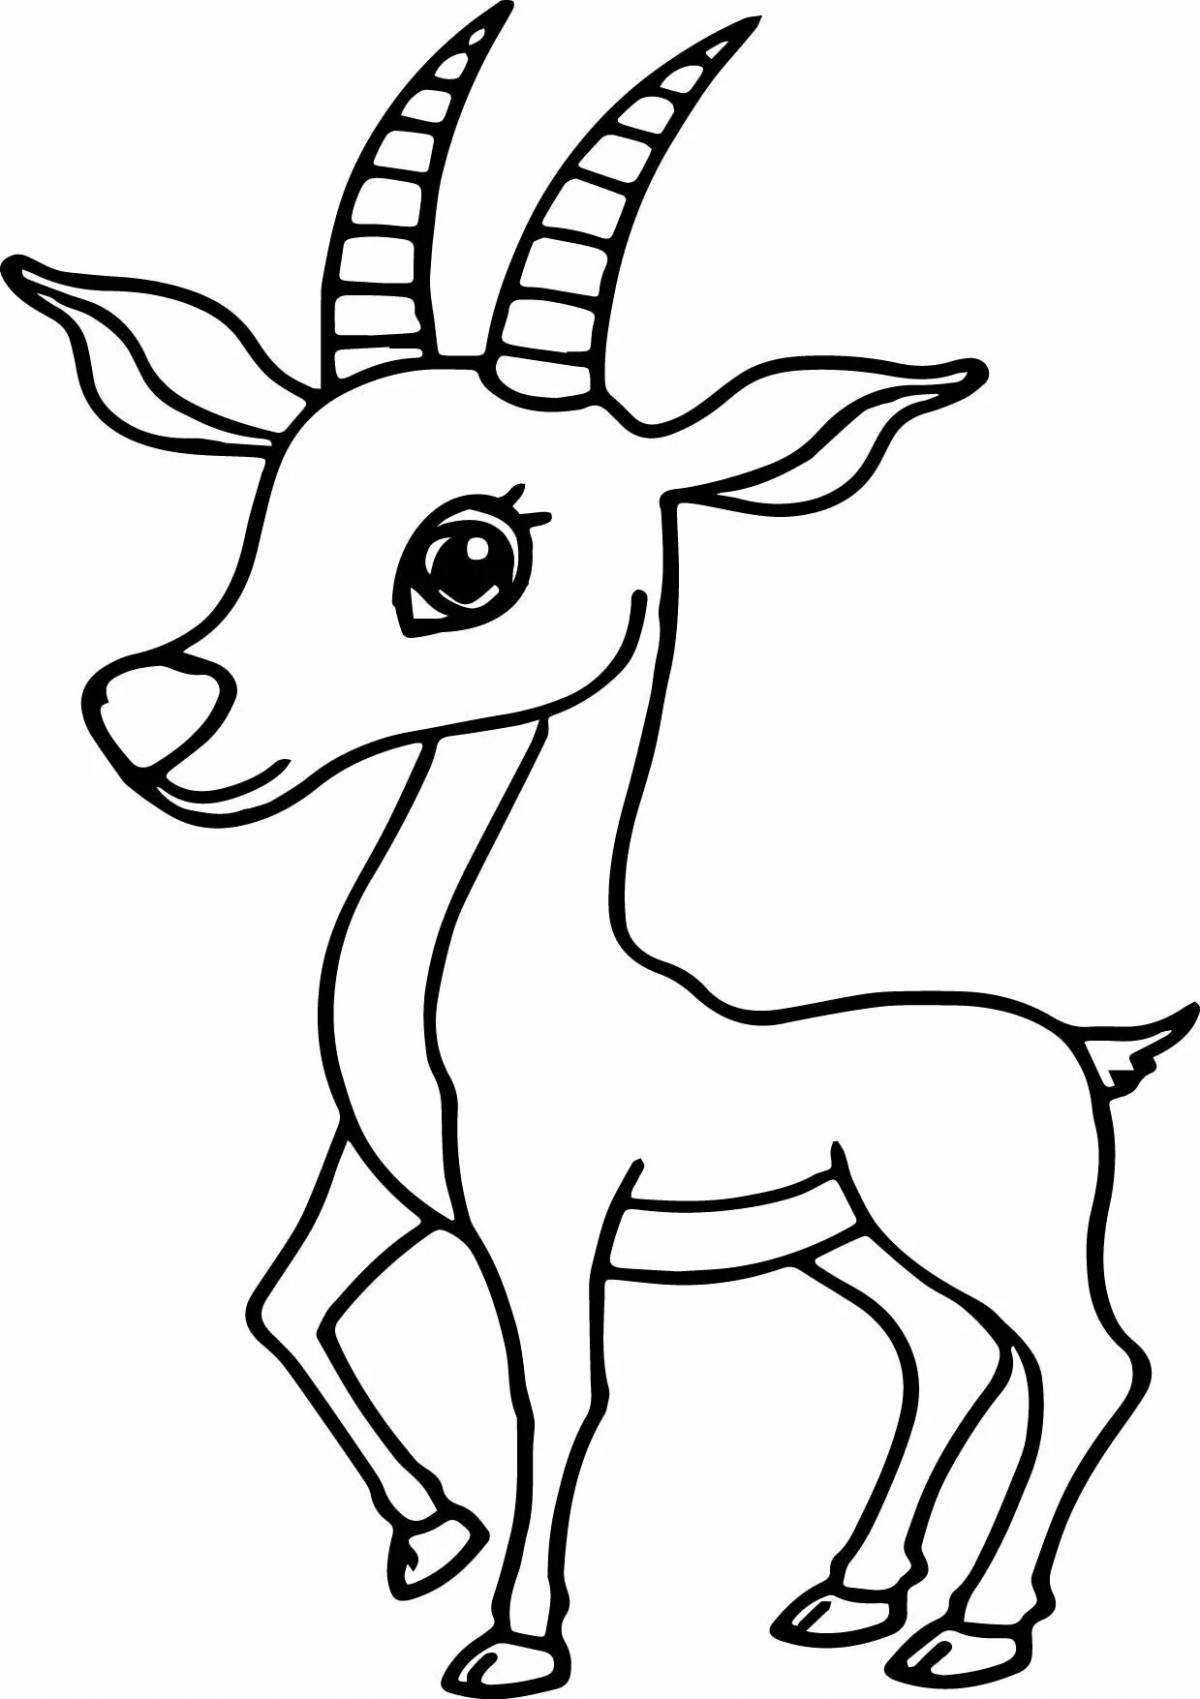 Impressive antelope coloring book for kids